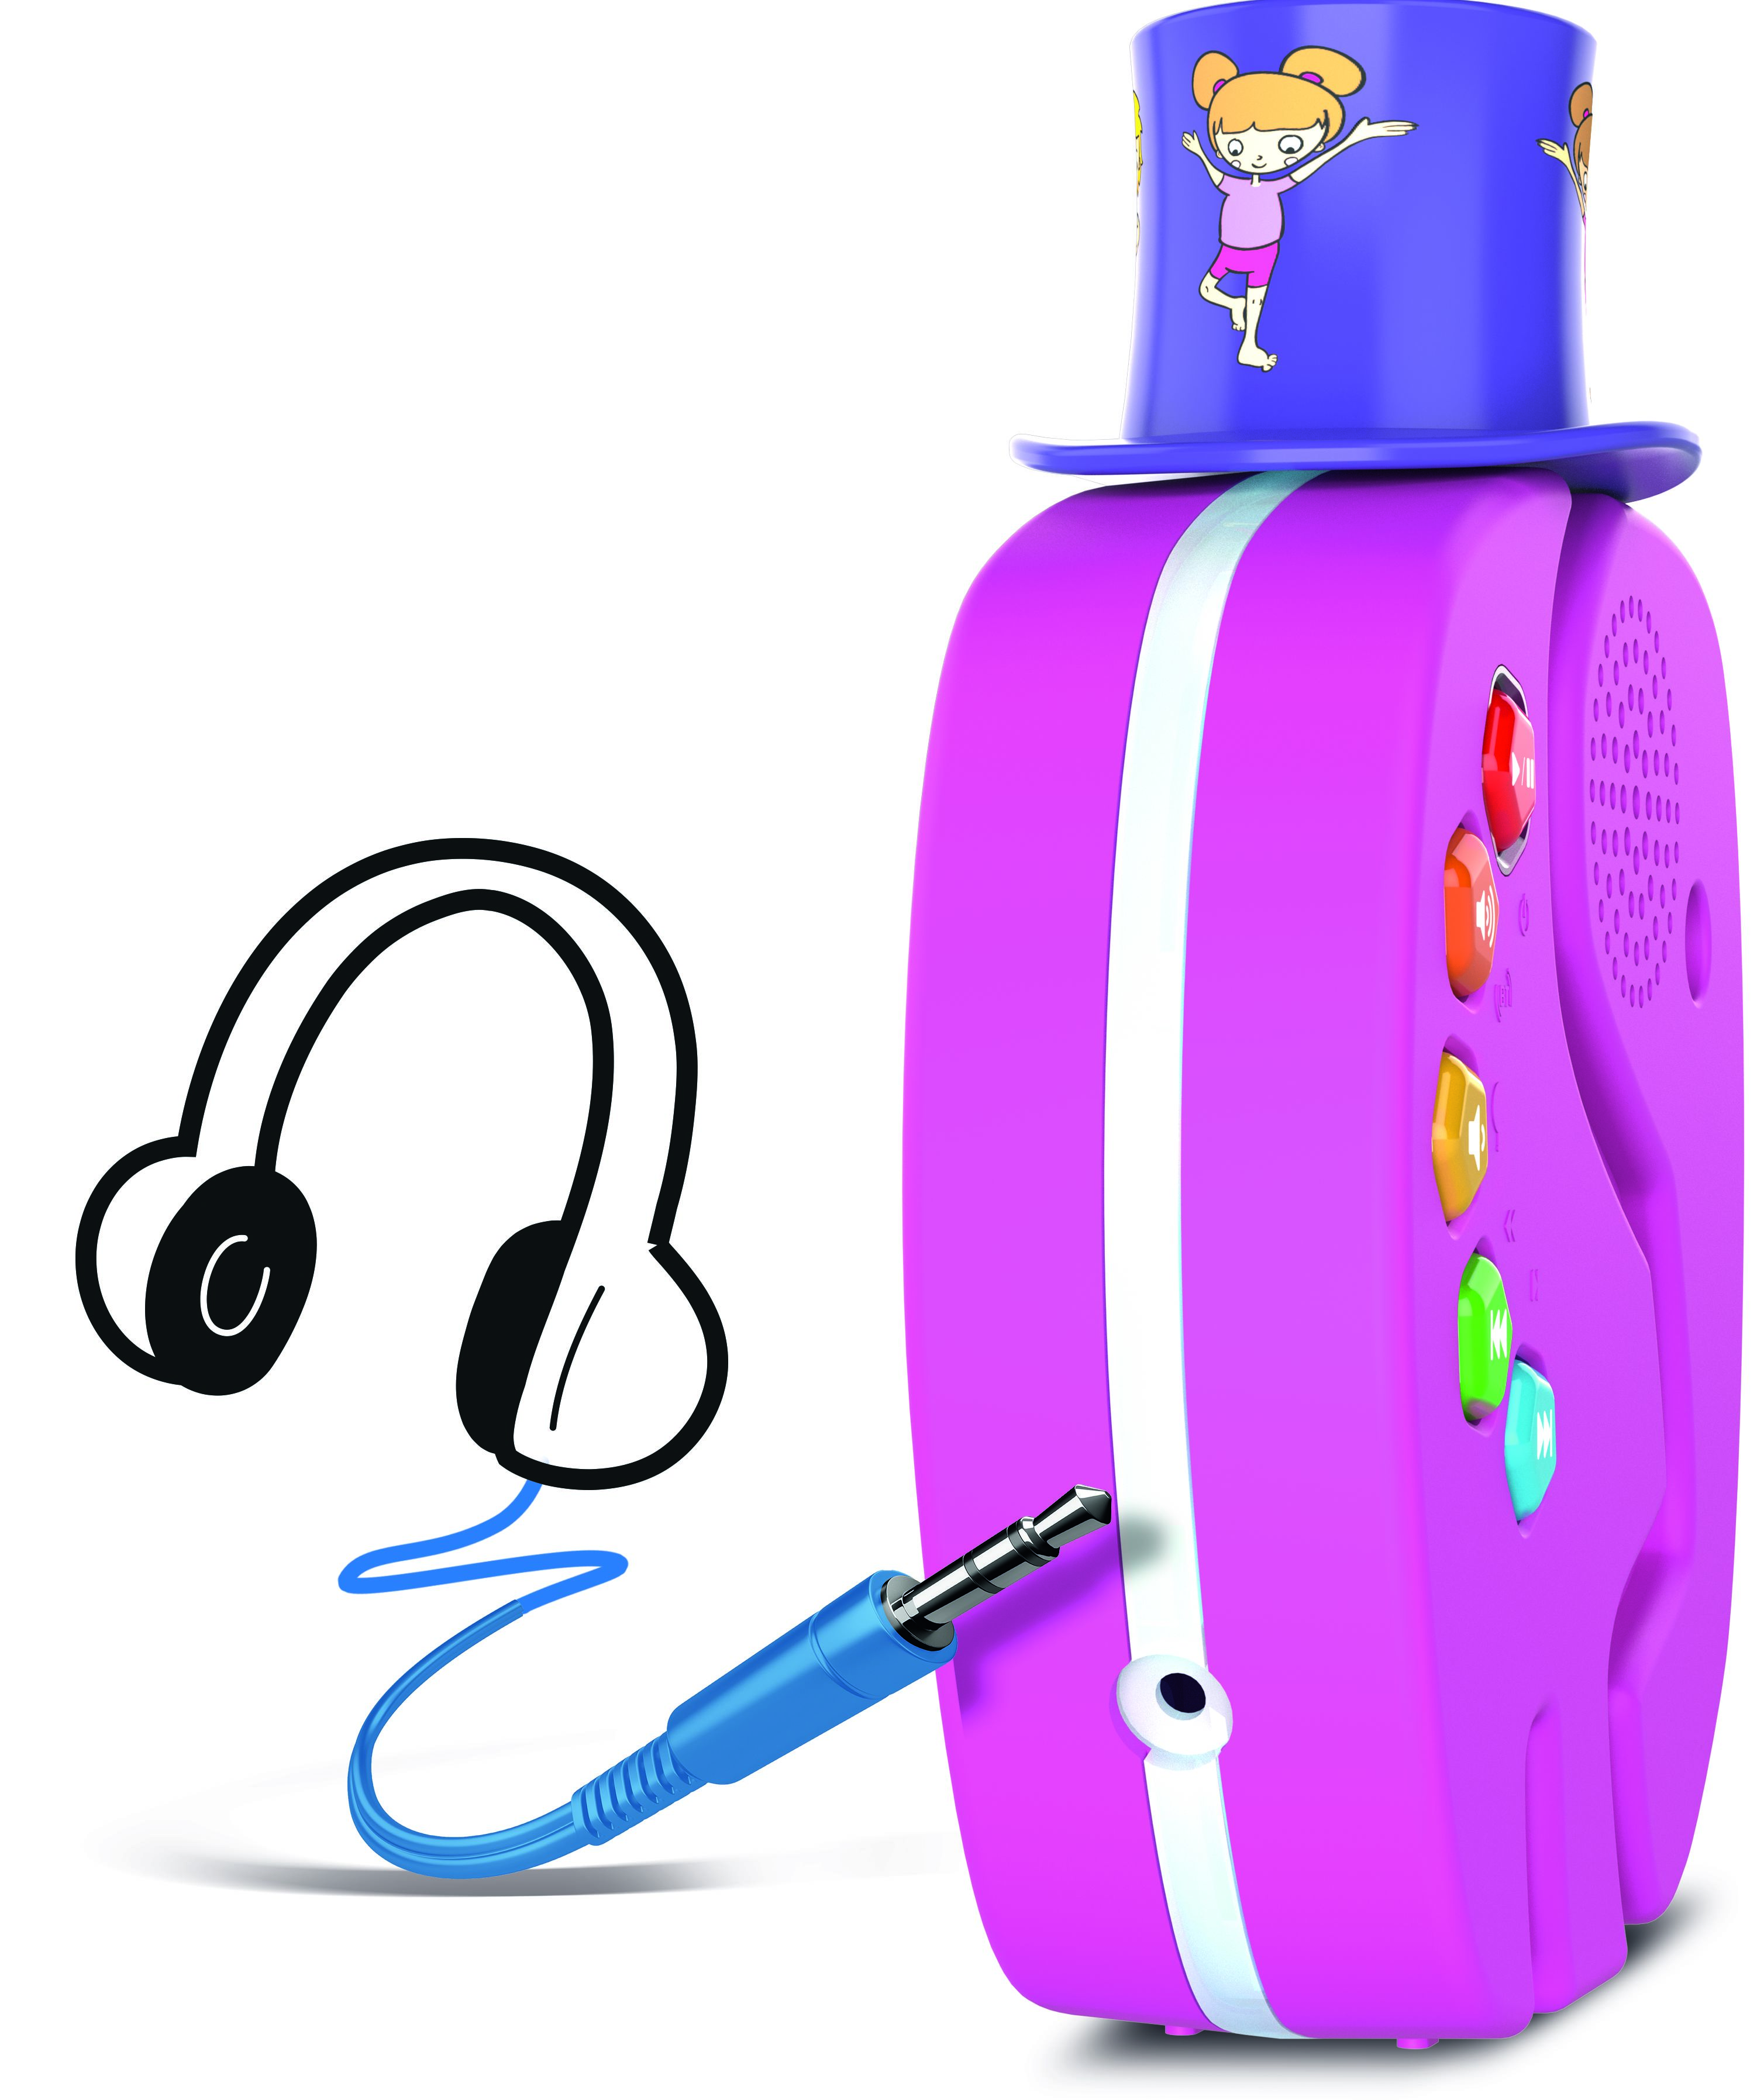 TECHNISAT TECHNIFANT-Look, Kinder Pink TECHNIFANT im Audioplayer für